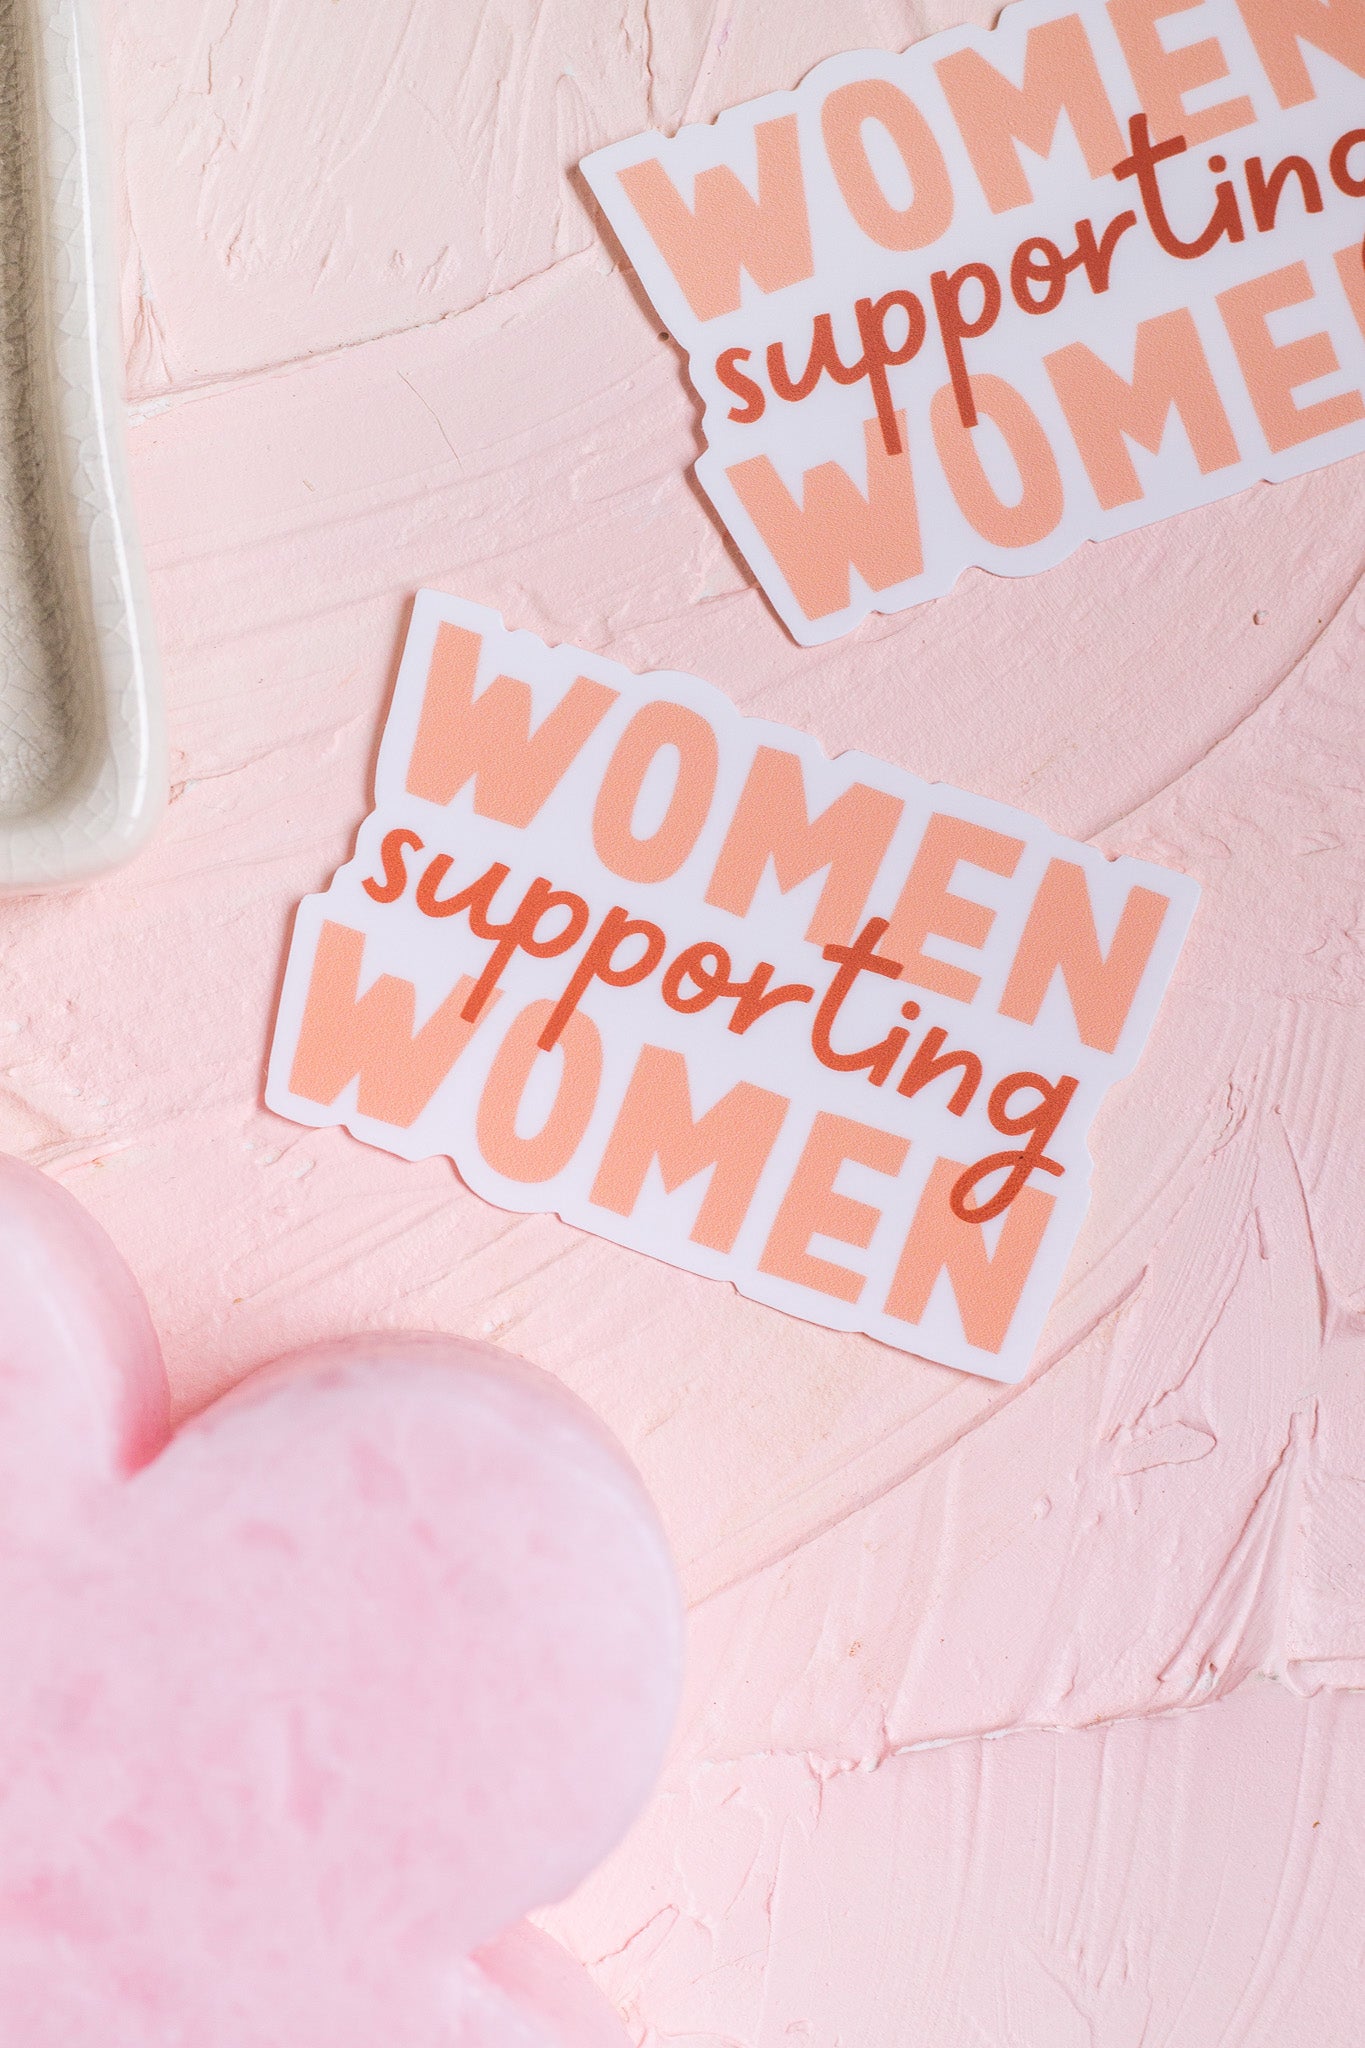 Women Supporting Women Sticker